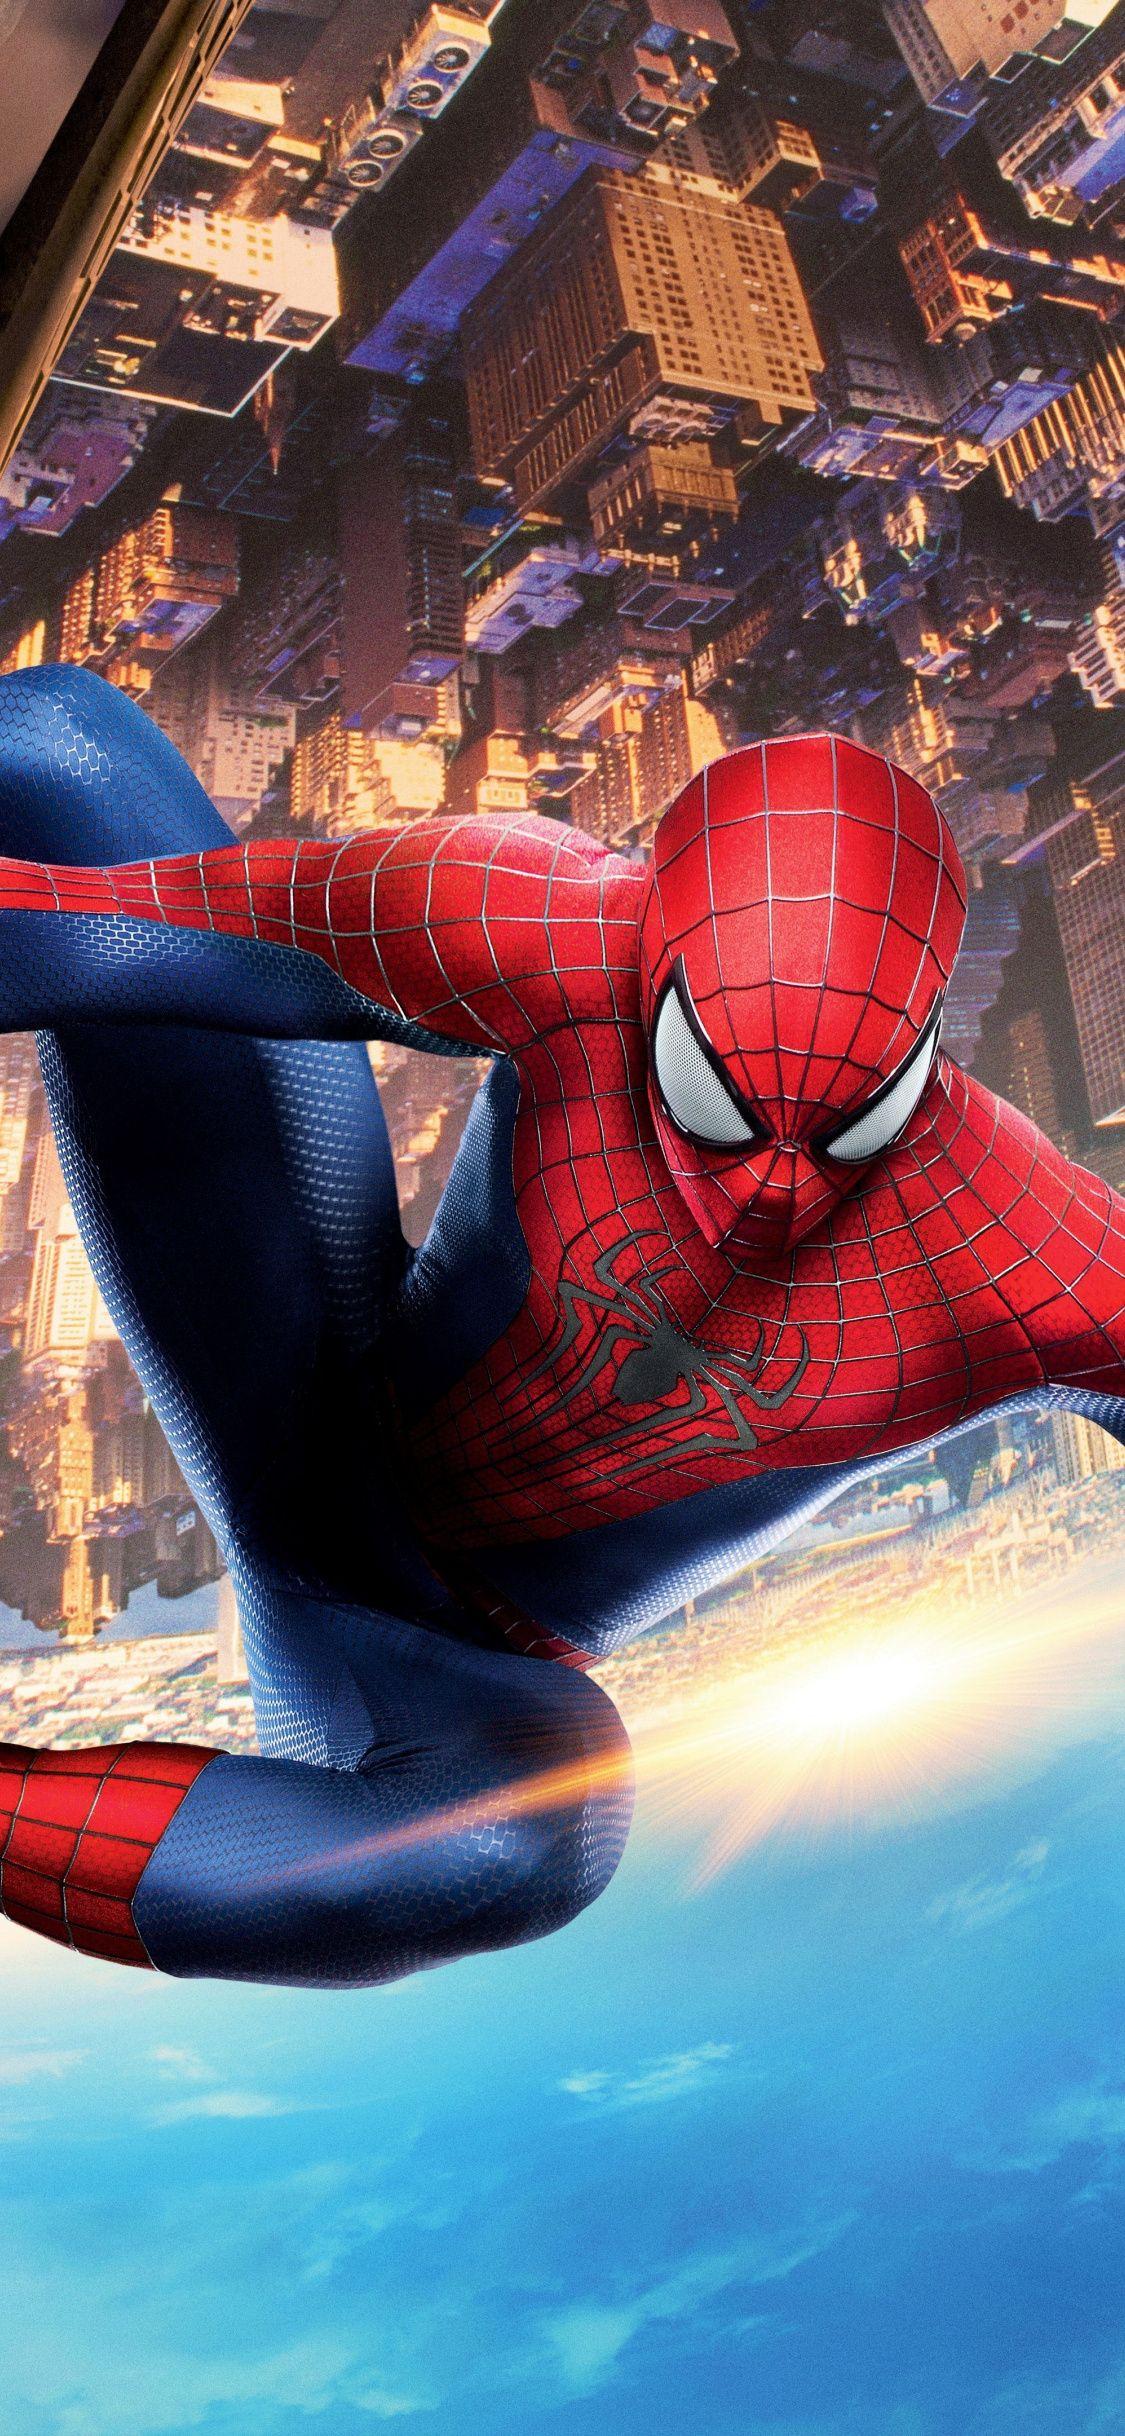 The Amazing Spider Man 2014 Movie, Spider Man, 1125x2436 Wallpaper. Superhero Wallpaper, Spiderman, Marvel Wallpaper